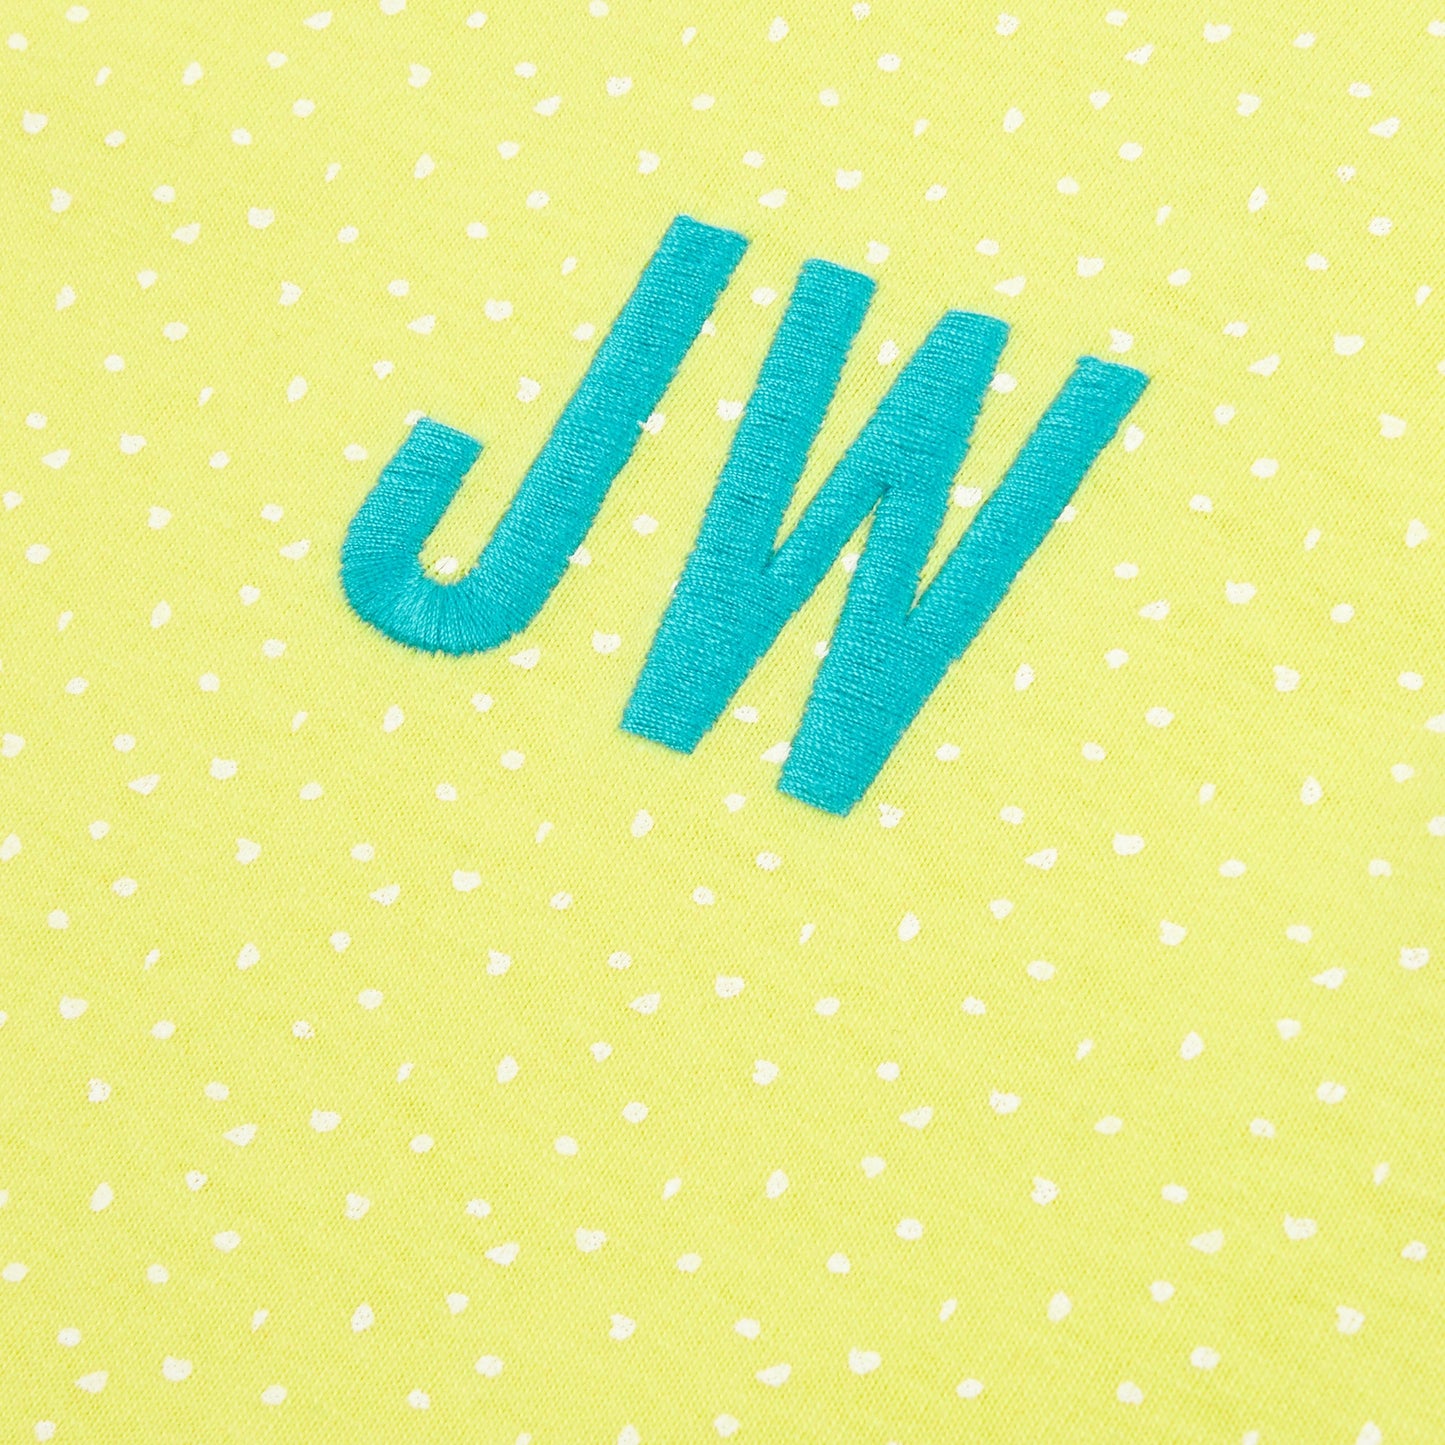 Jack Wills Girls Spotty T-Shirt JWS5279385